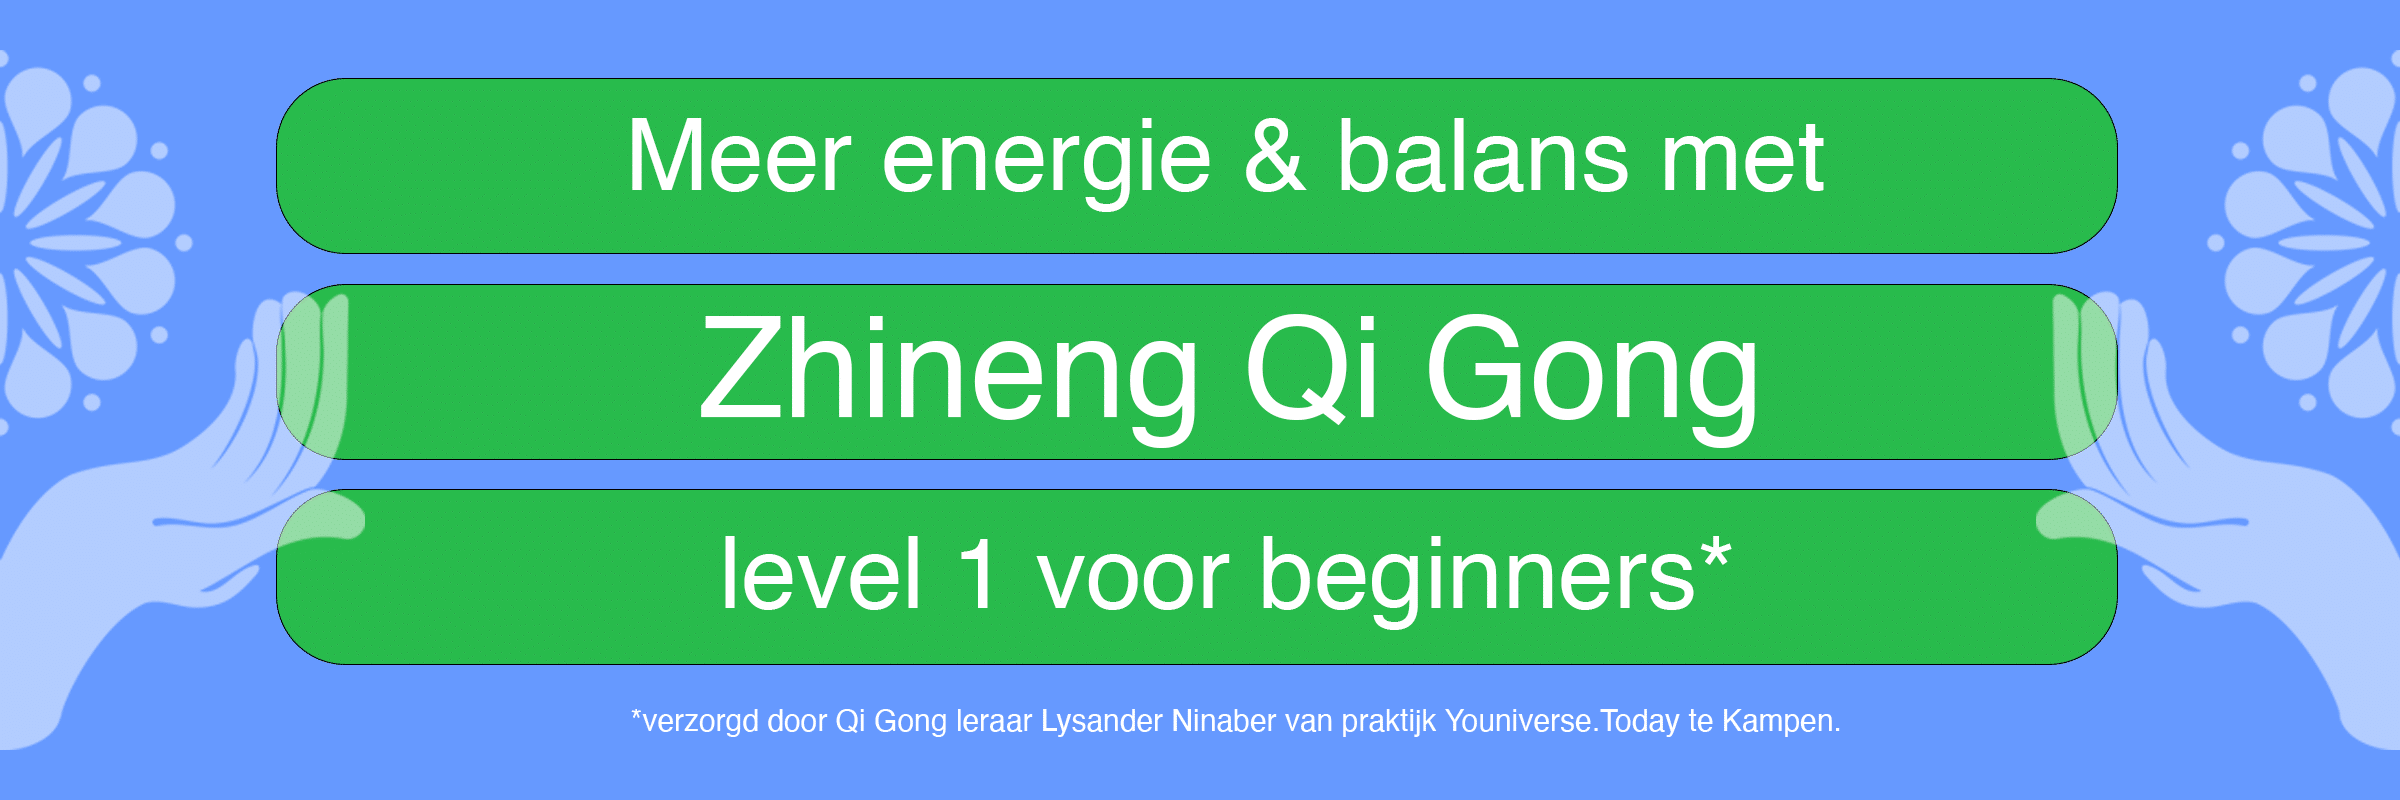 Zhineng Qi Gong level 1 voor beginners